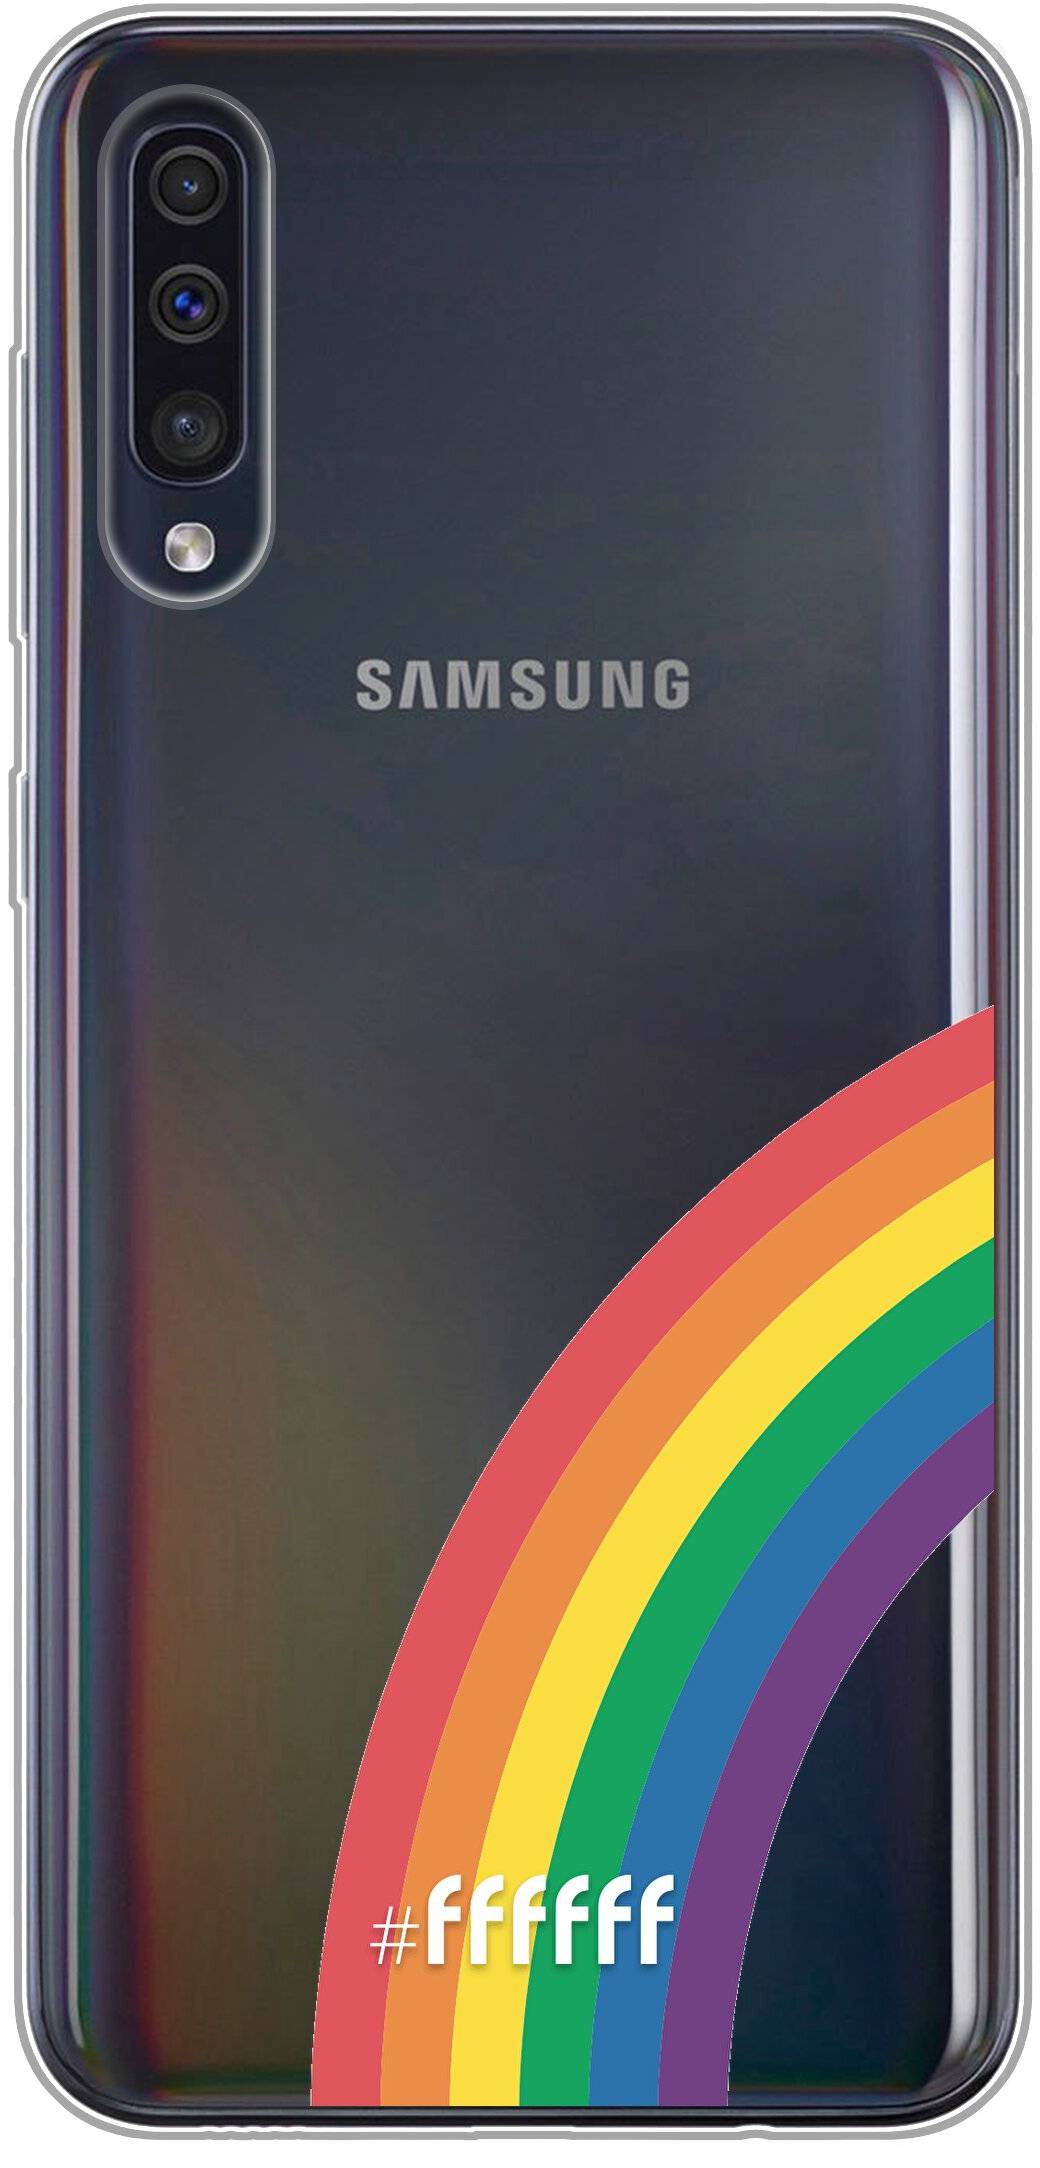 #LGBT - Rainbow Galaxy A50s